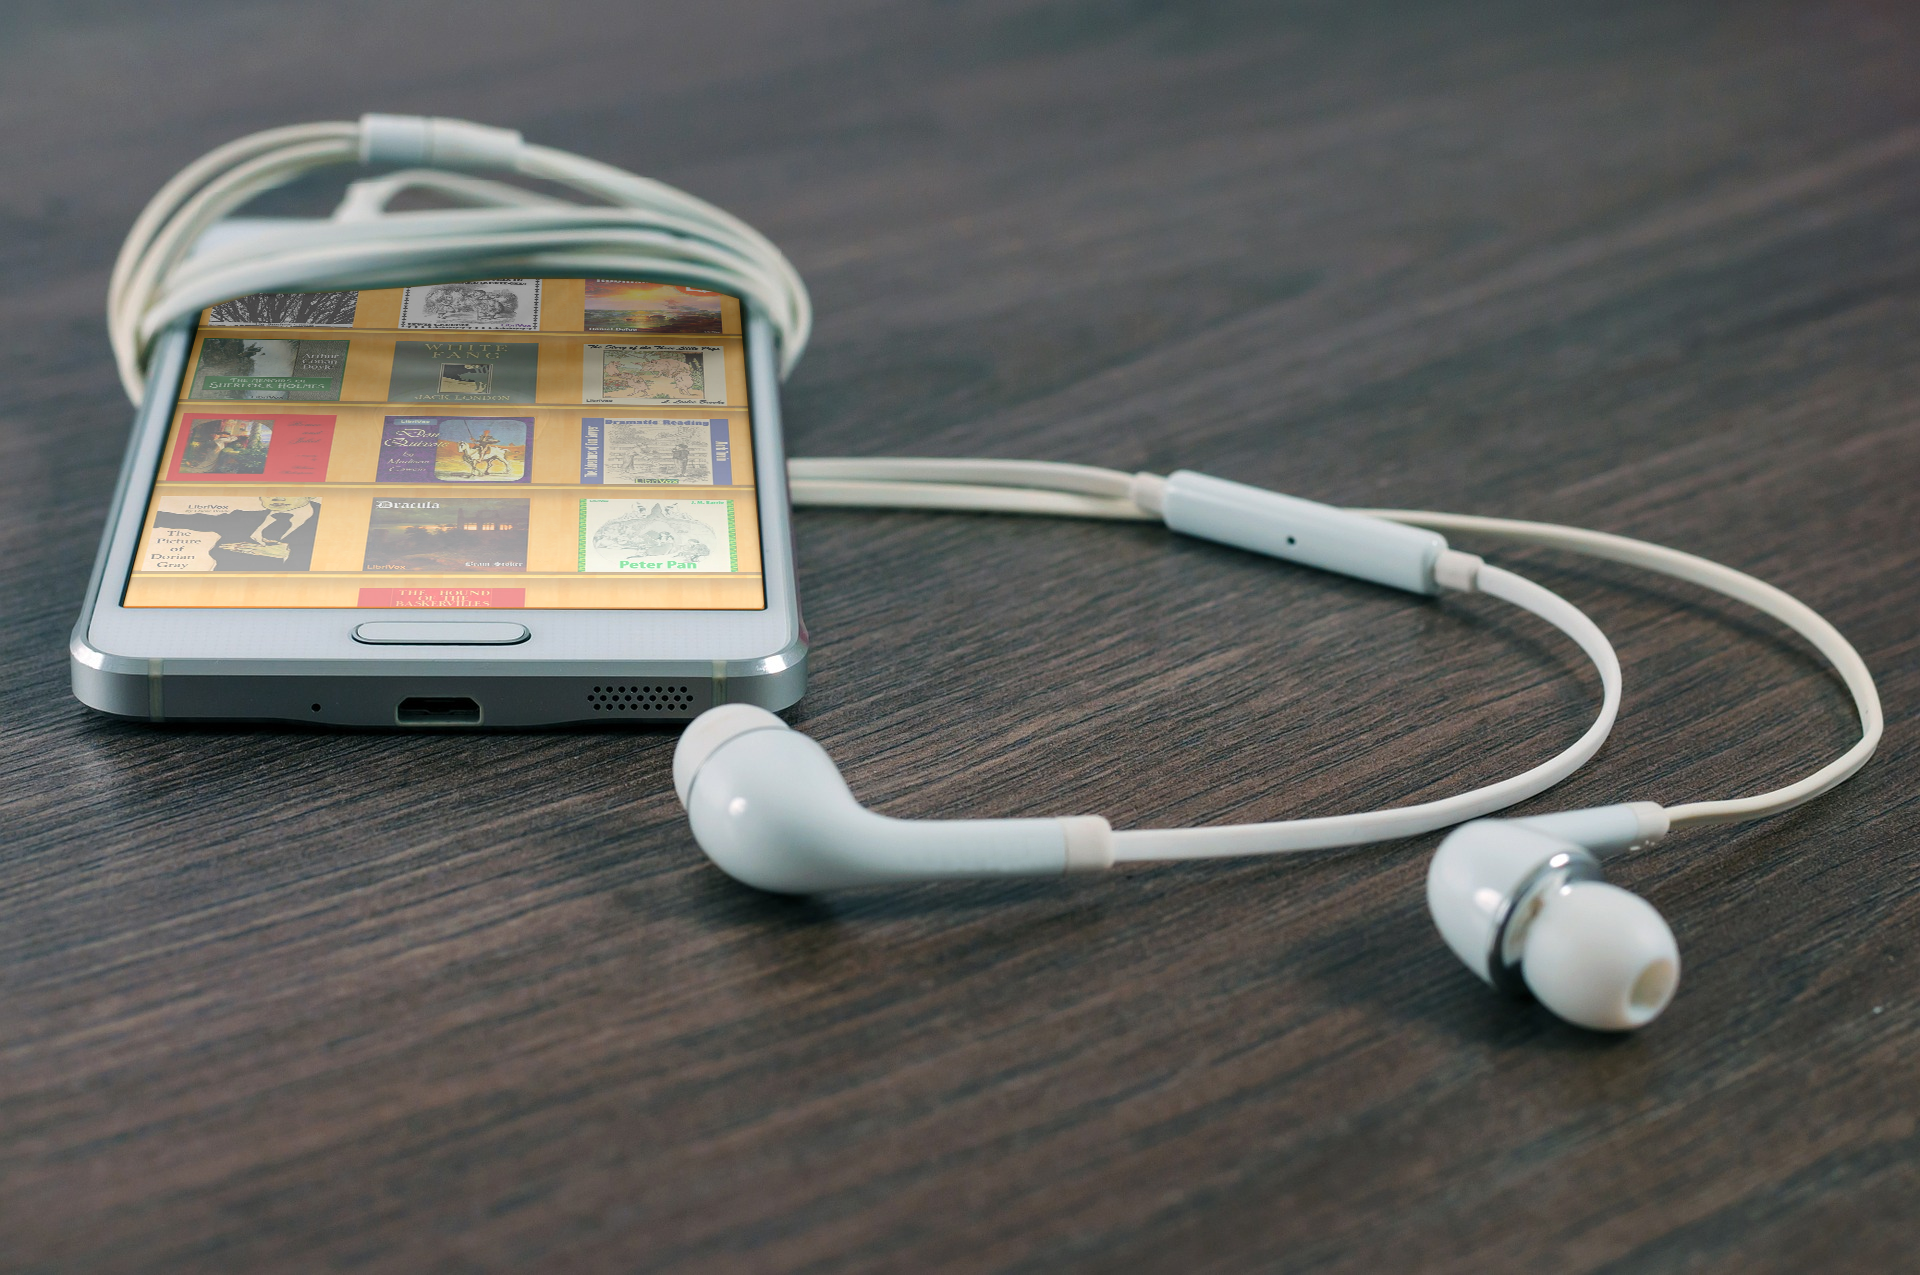 Livres Audio – Applications sur Google Play